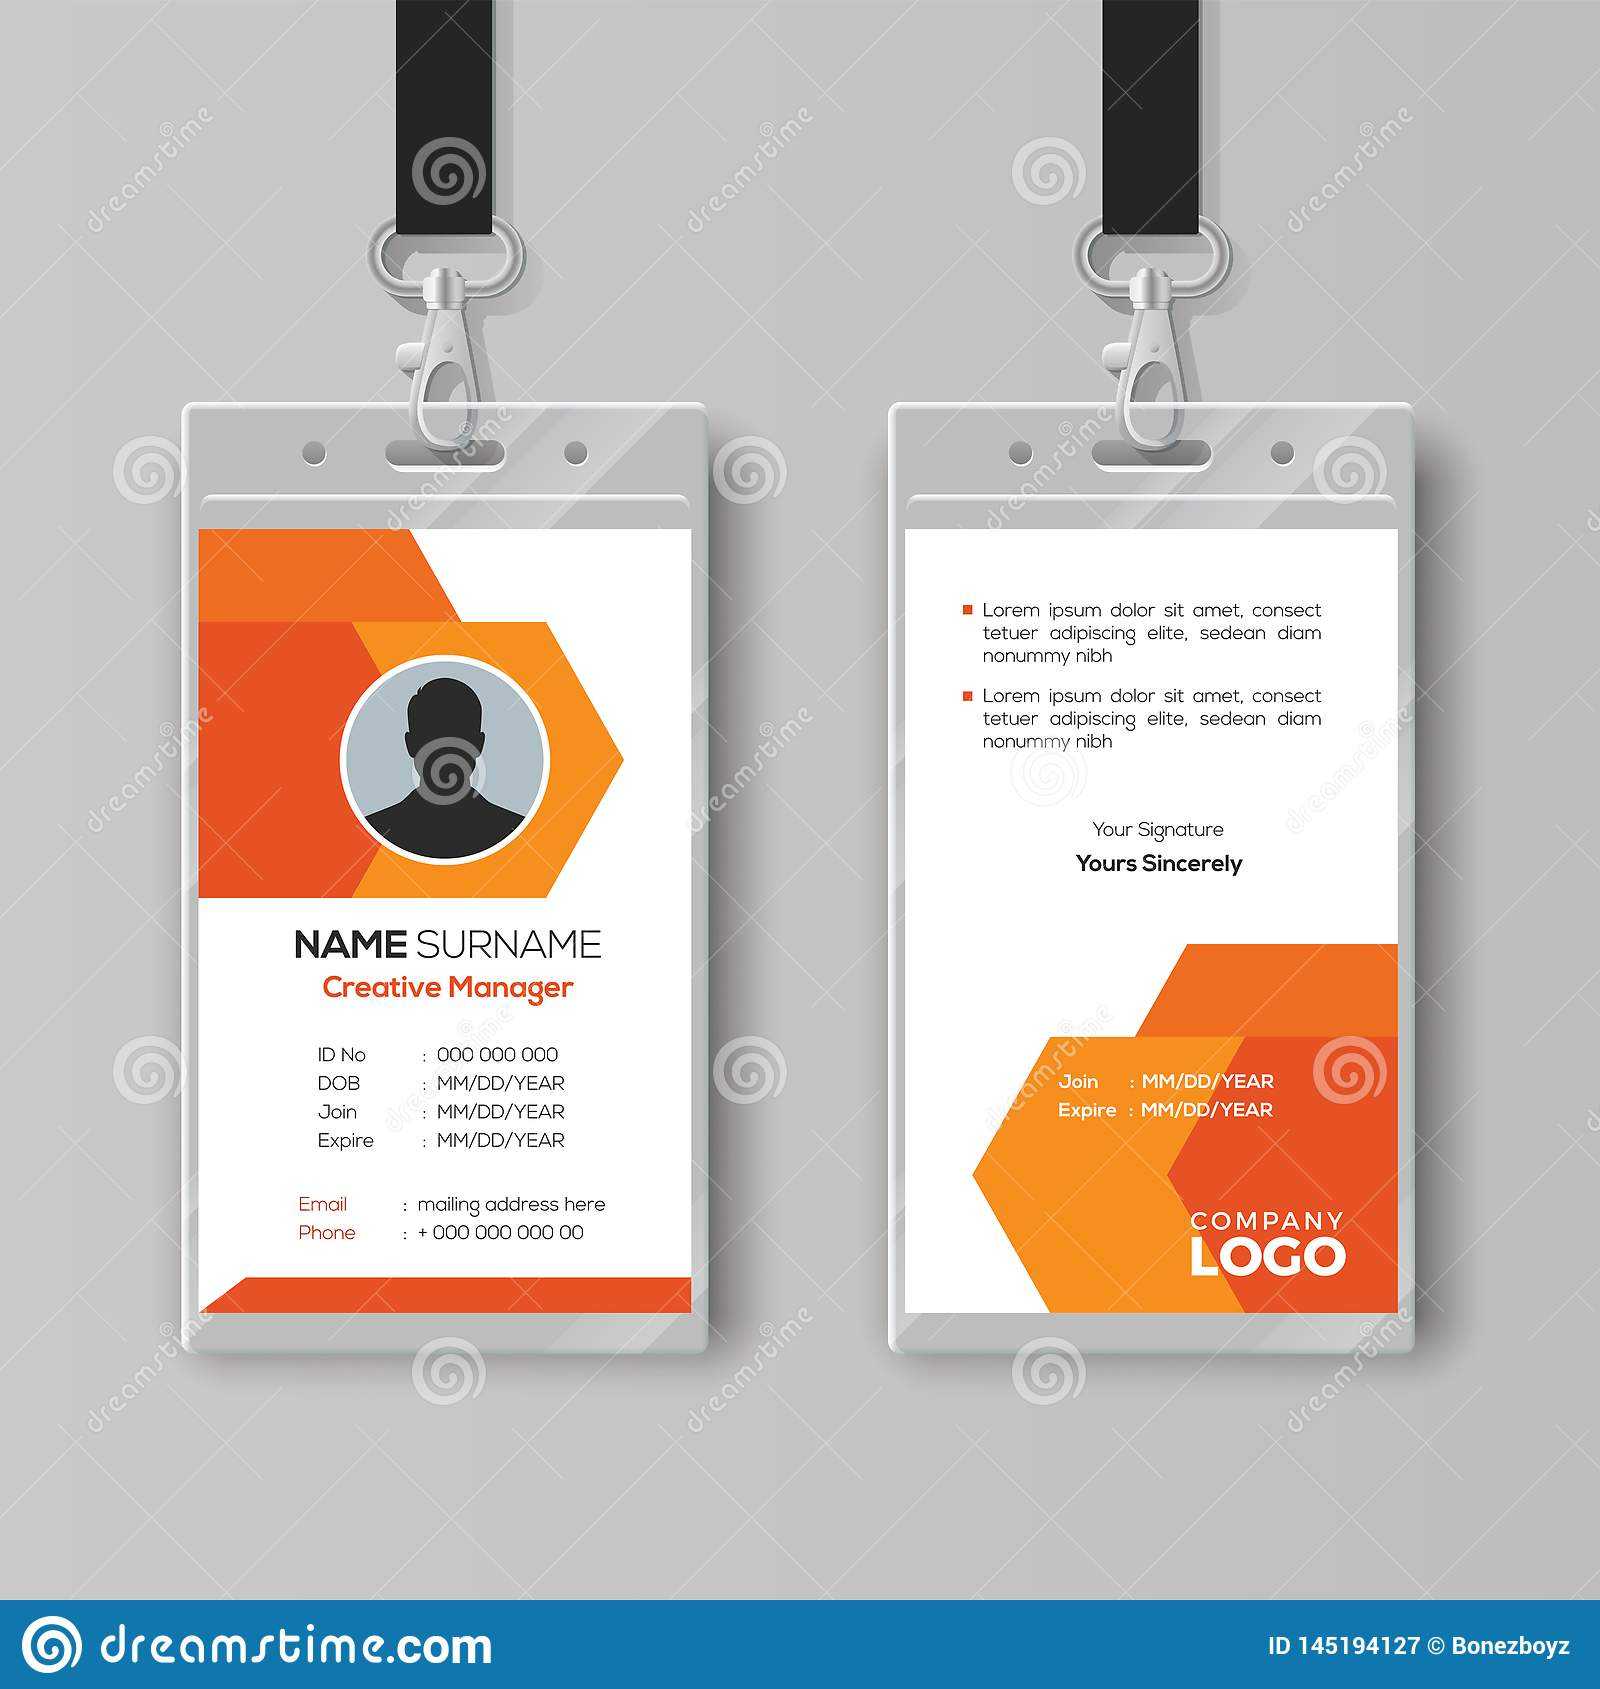 Company Id Card Design Template – Template Collection Throughout Company Id Card Design Template